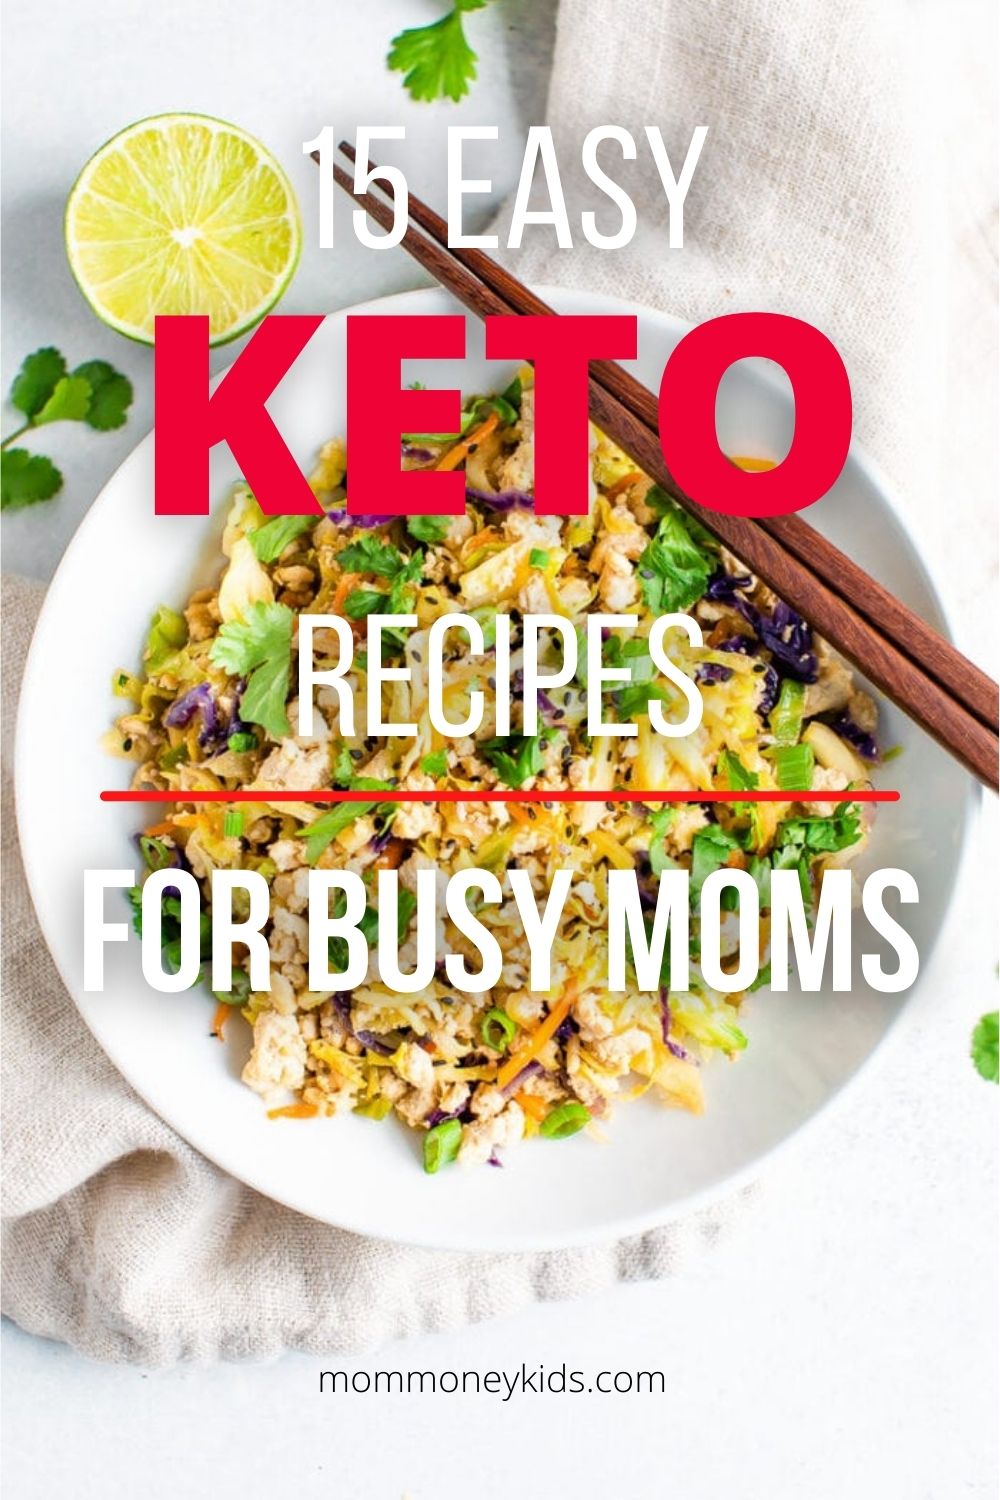 15 easy keto recipes for busy moms